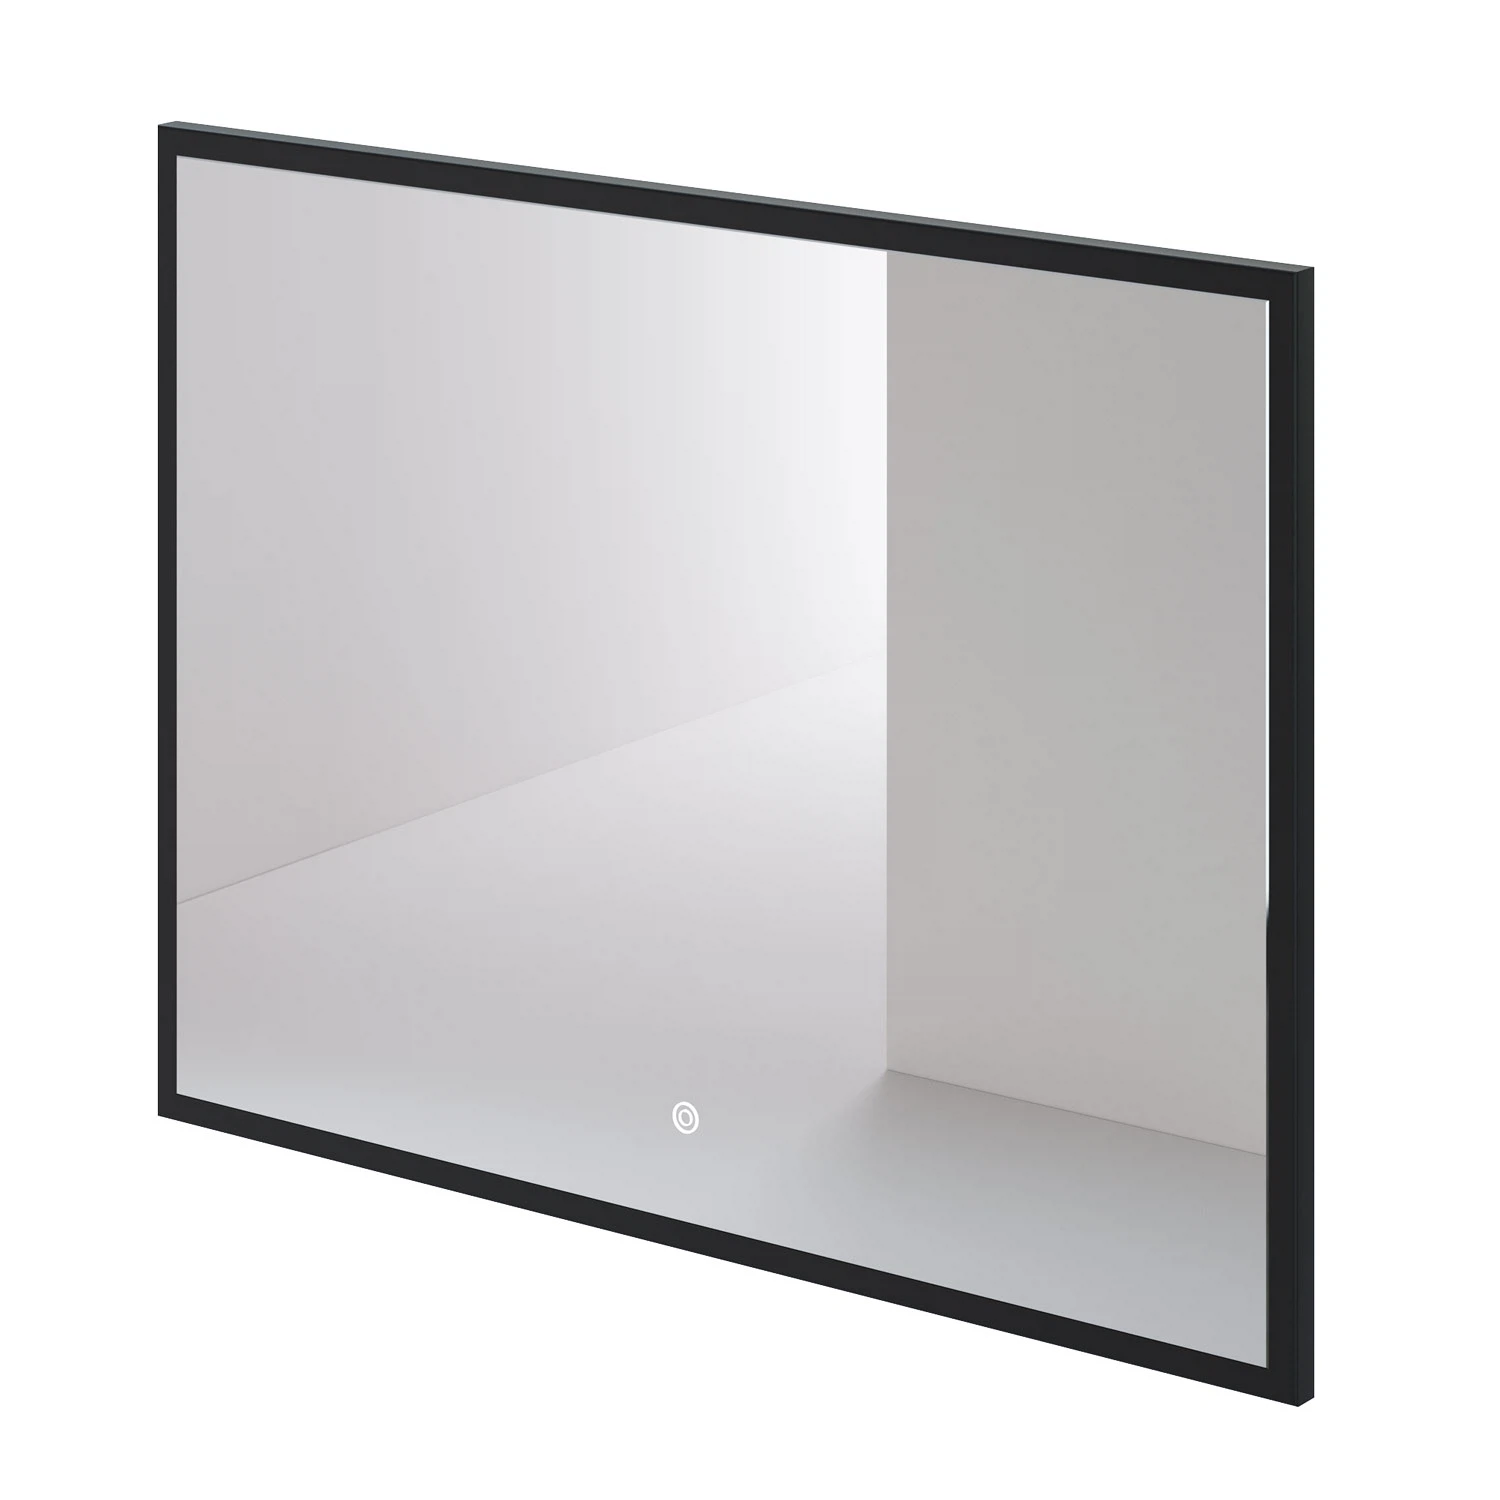 Зеркало Итана Black D800 4657792953395 800*600 мм (LED) черный